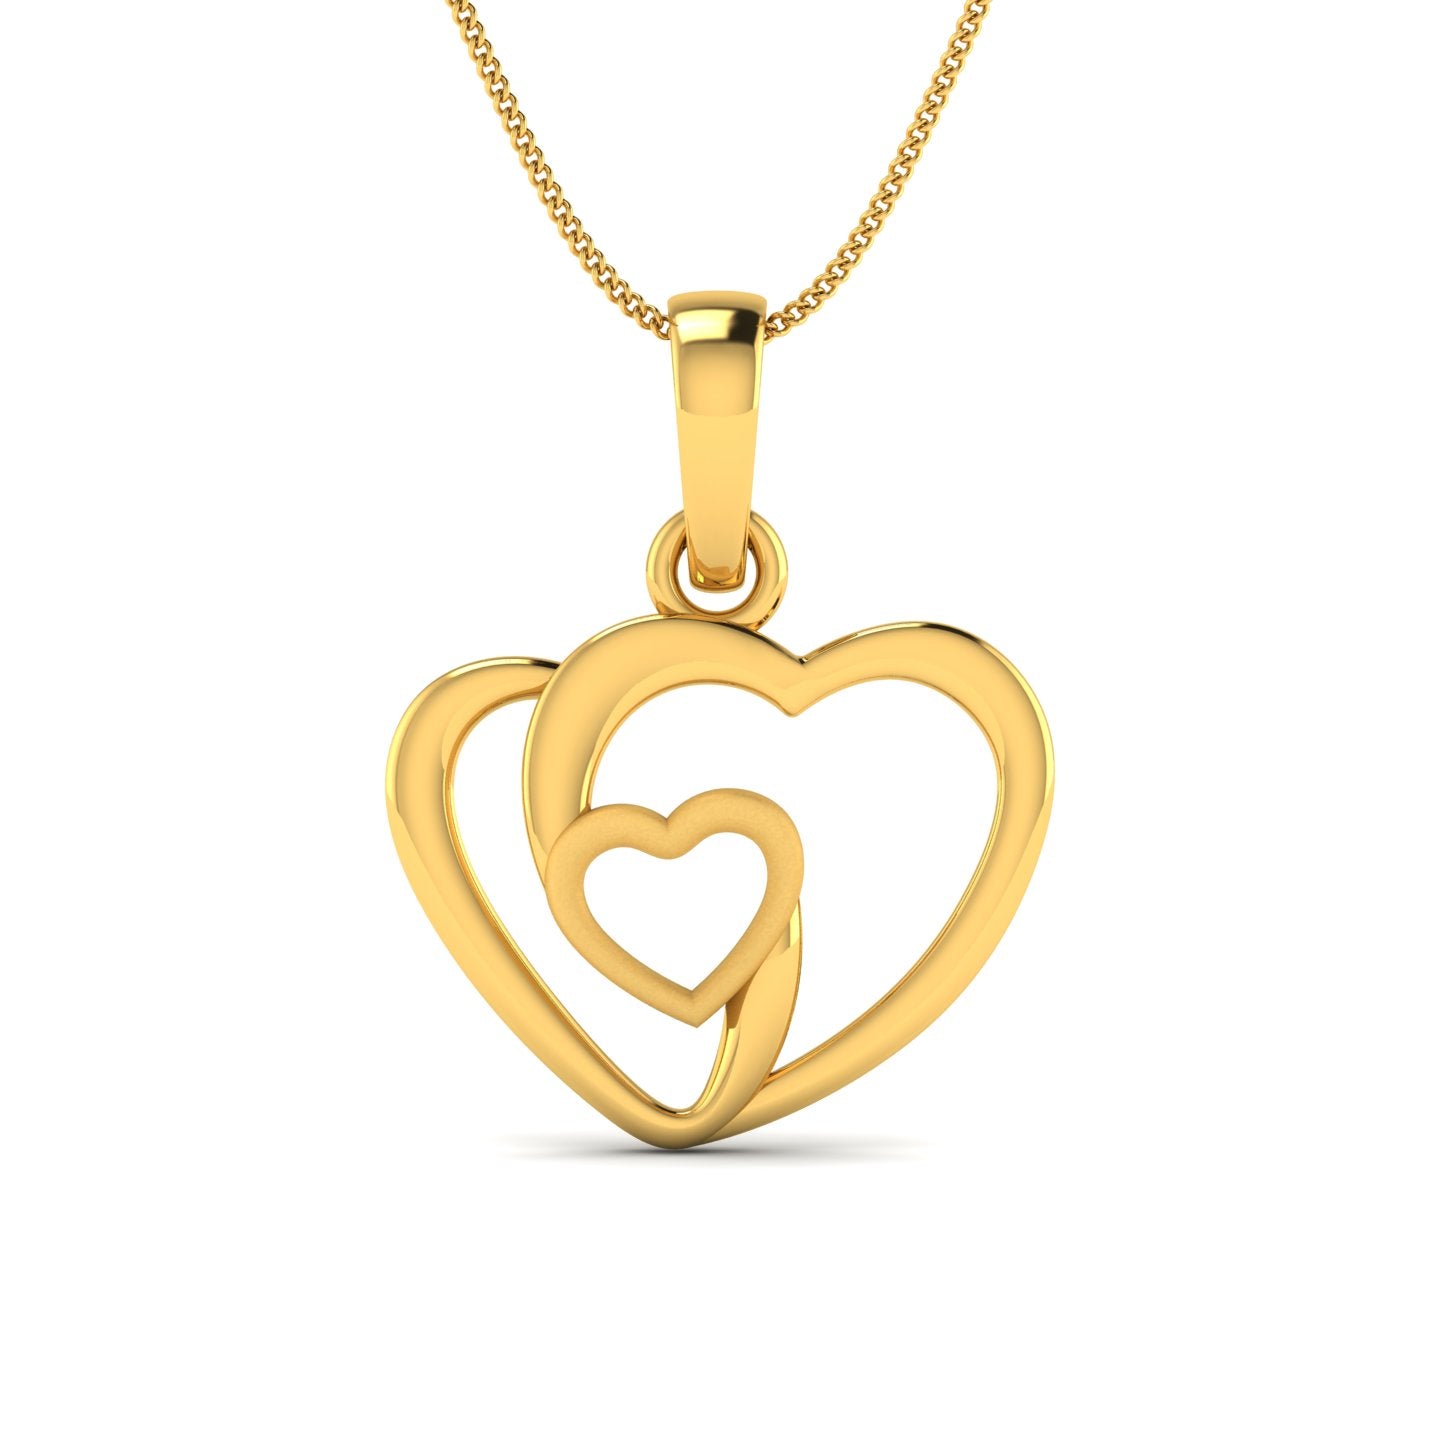 Interlock hearts 22KT pendant